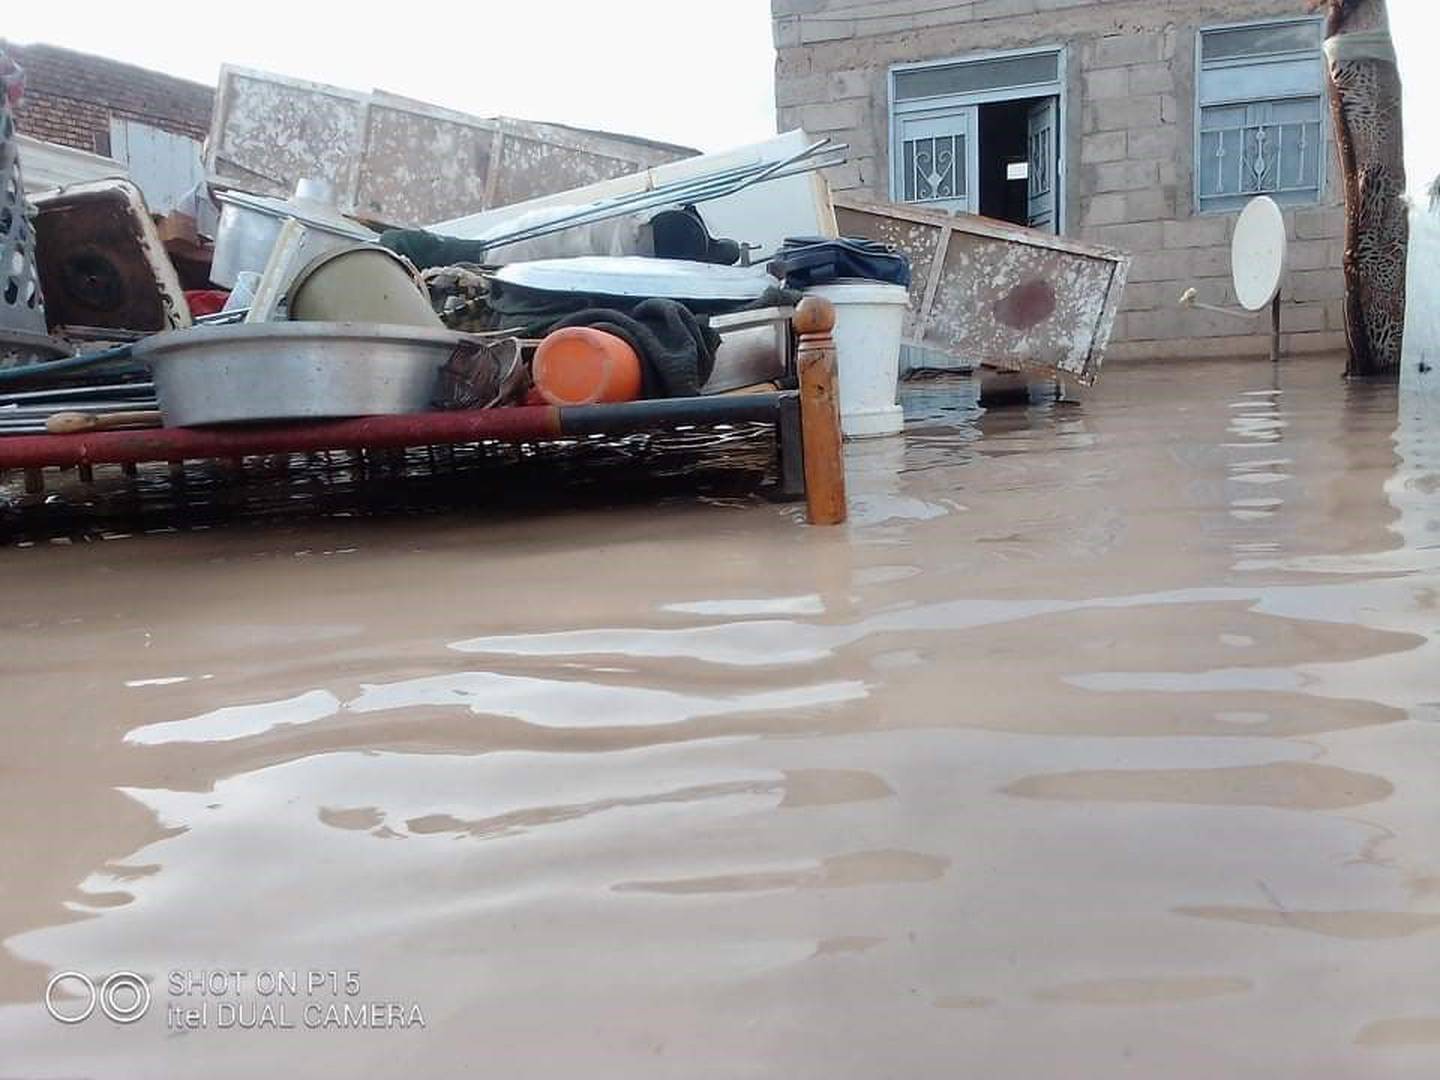 Sudan’s Gedaref region flooded on Tuesday